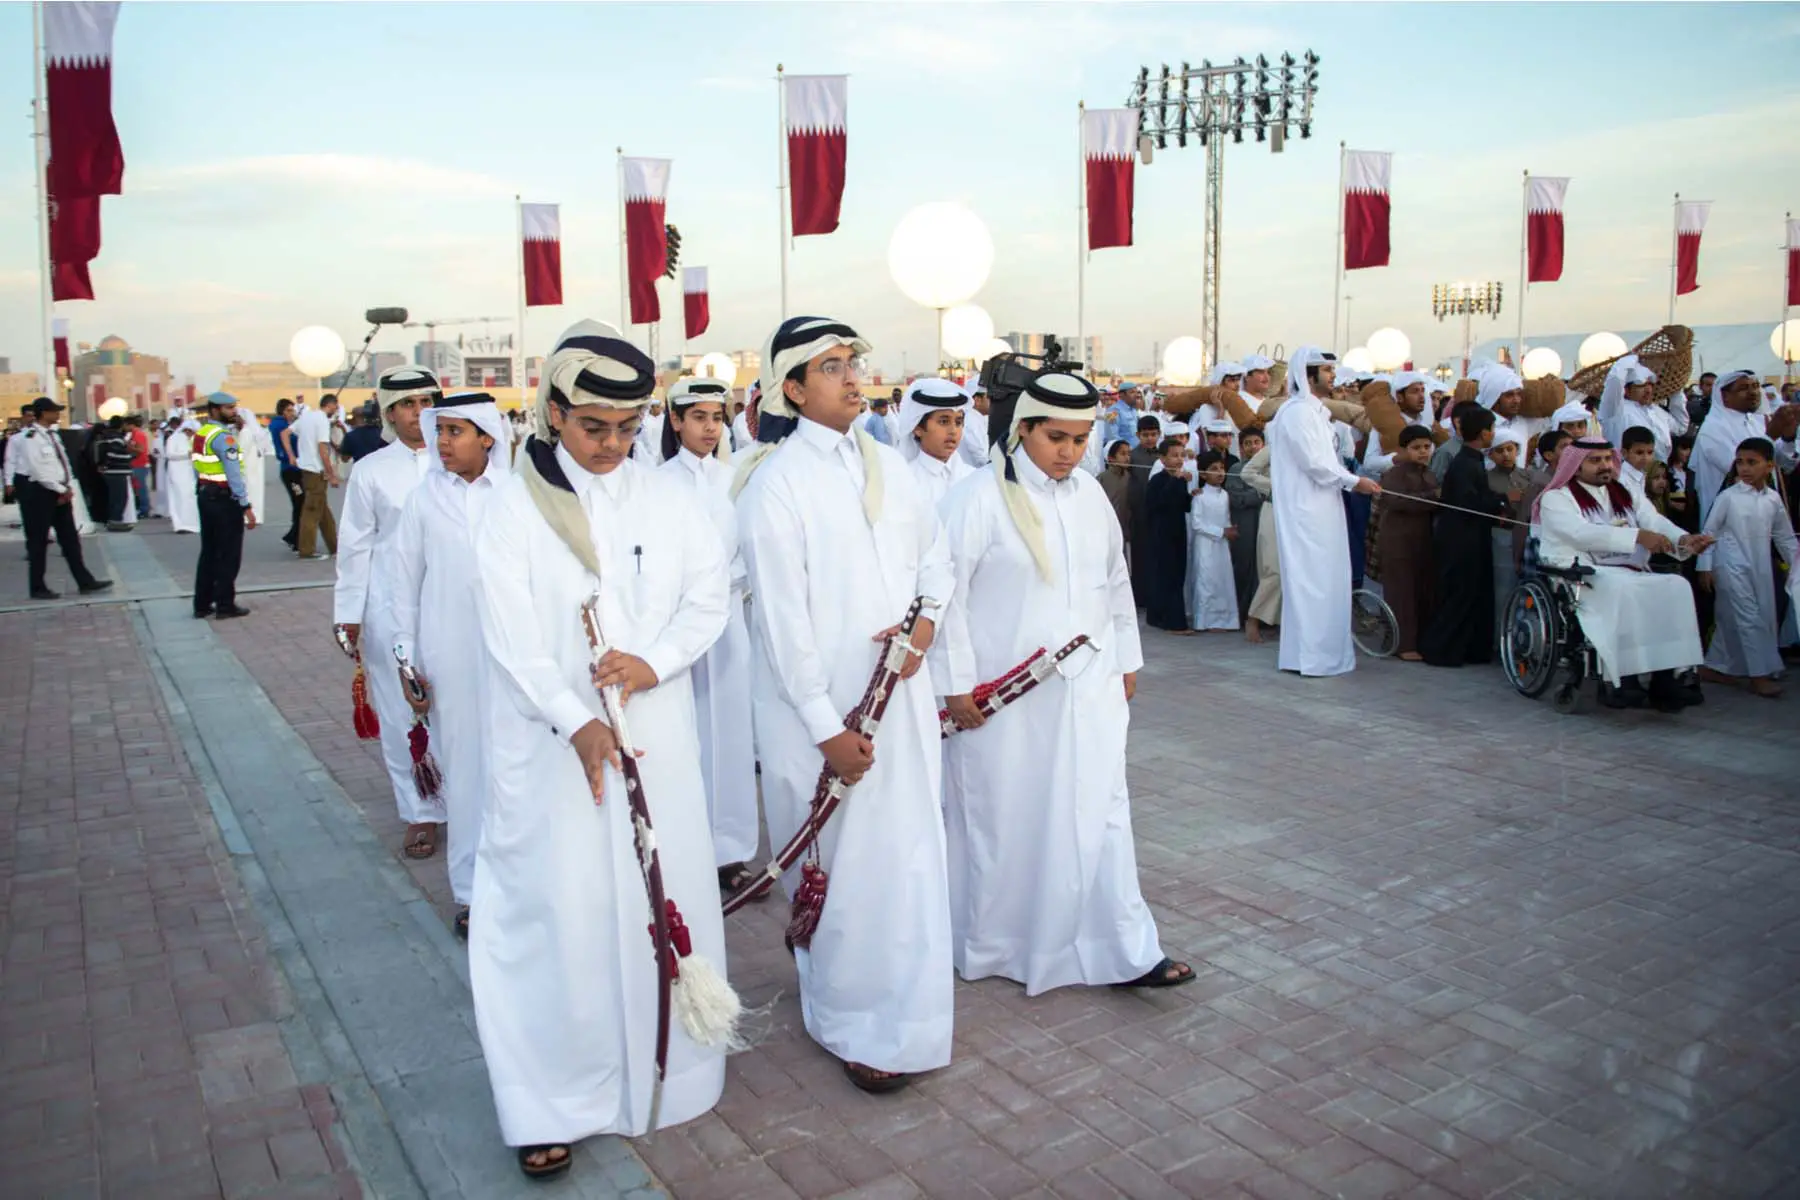 traditional parade in Doha, Qatar